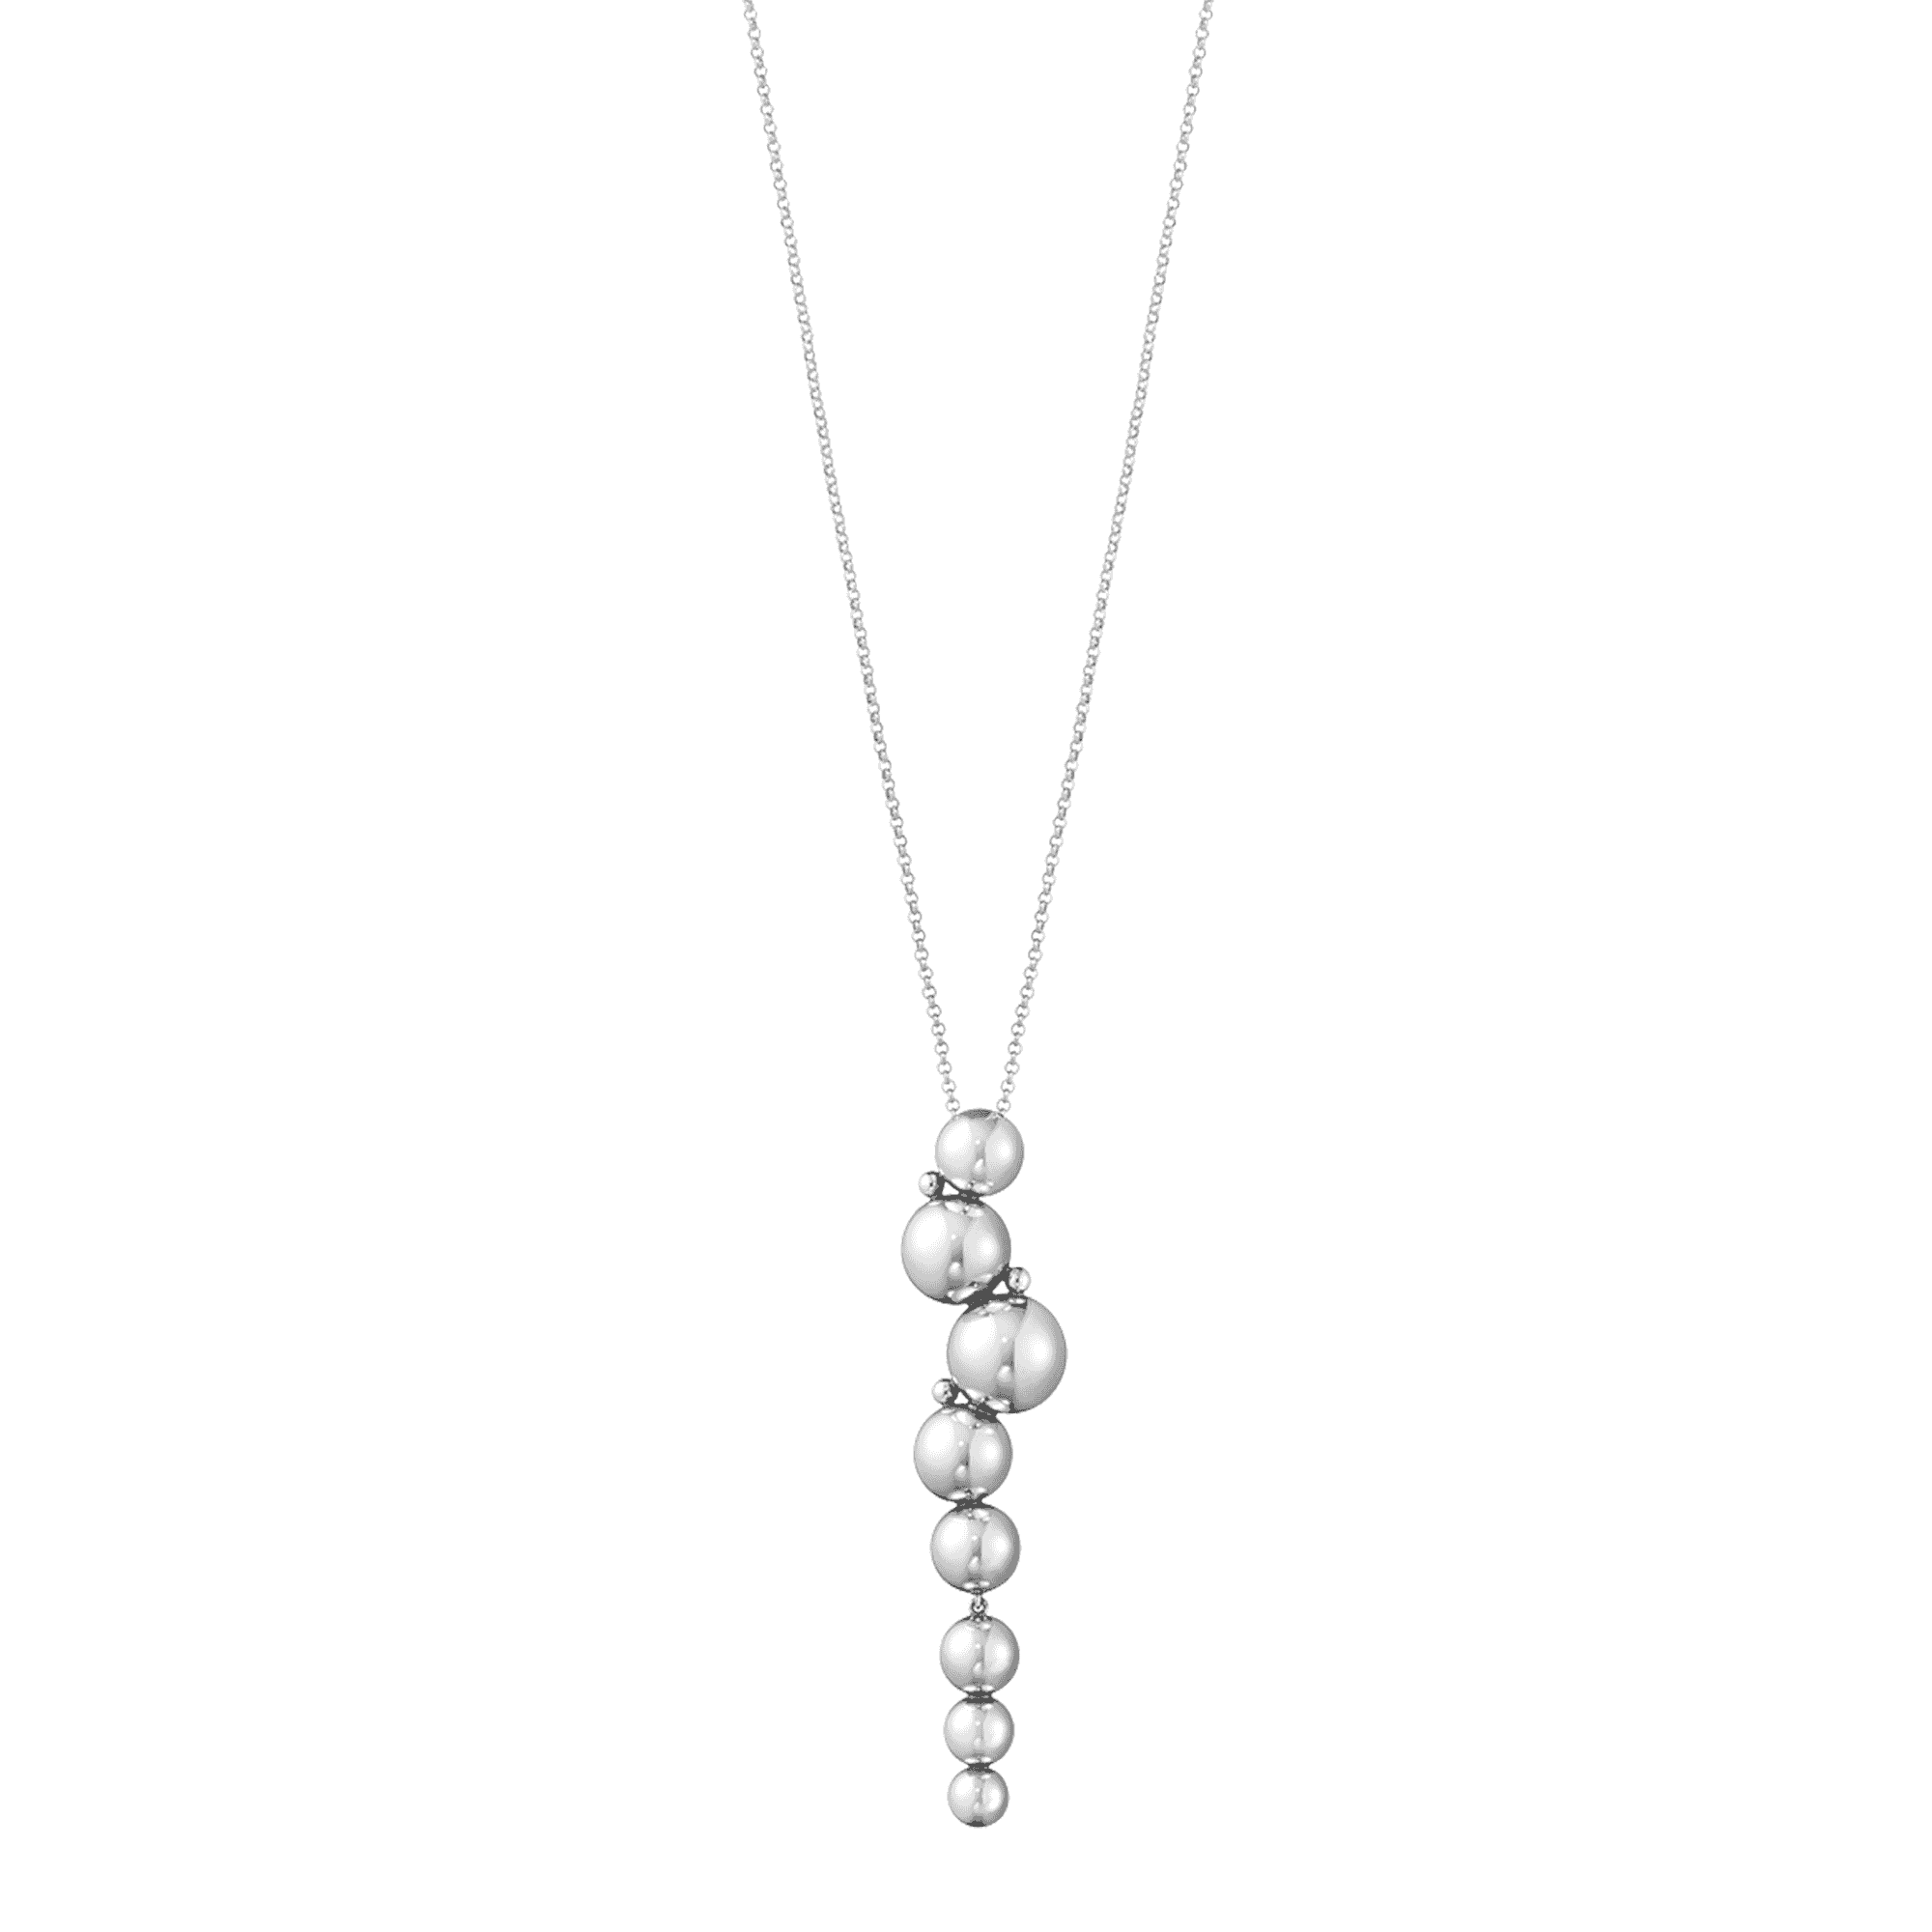 Moonlight Grapes silver pendant